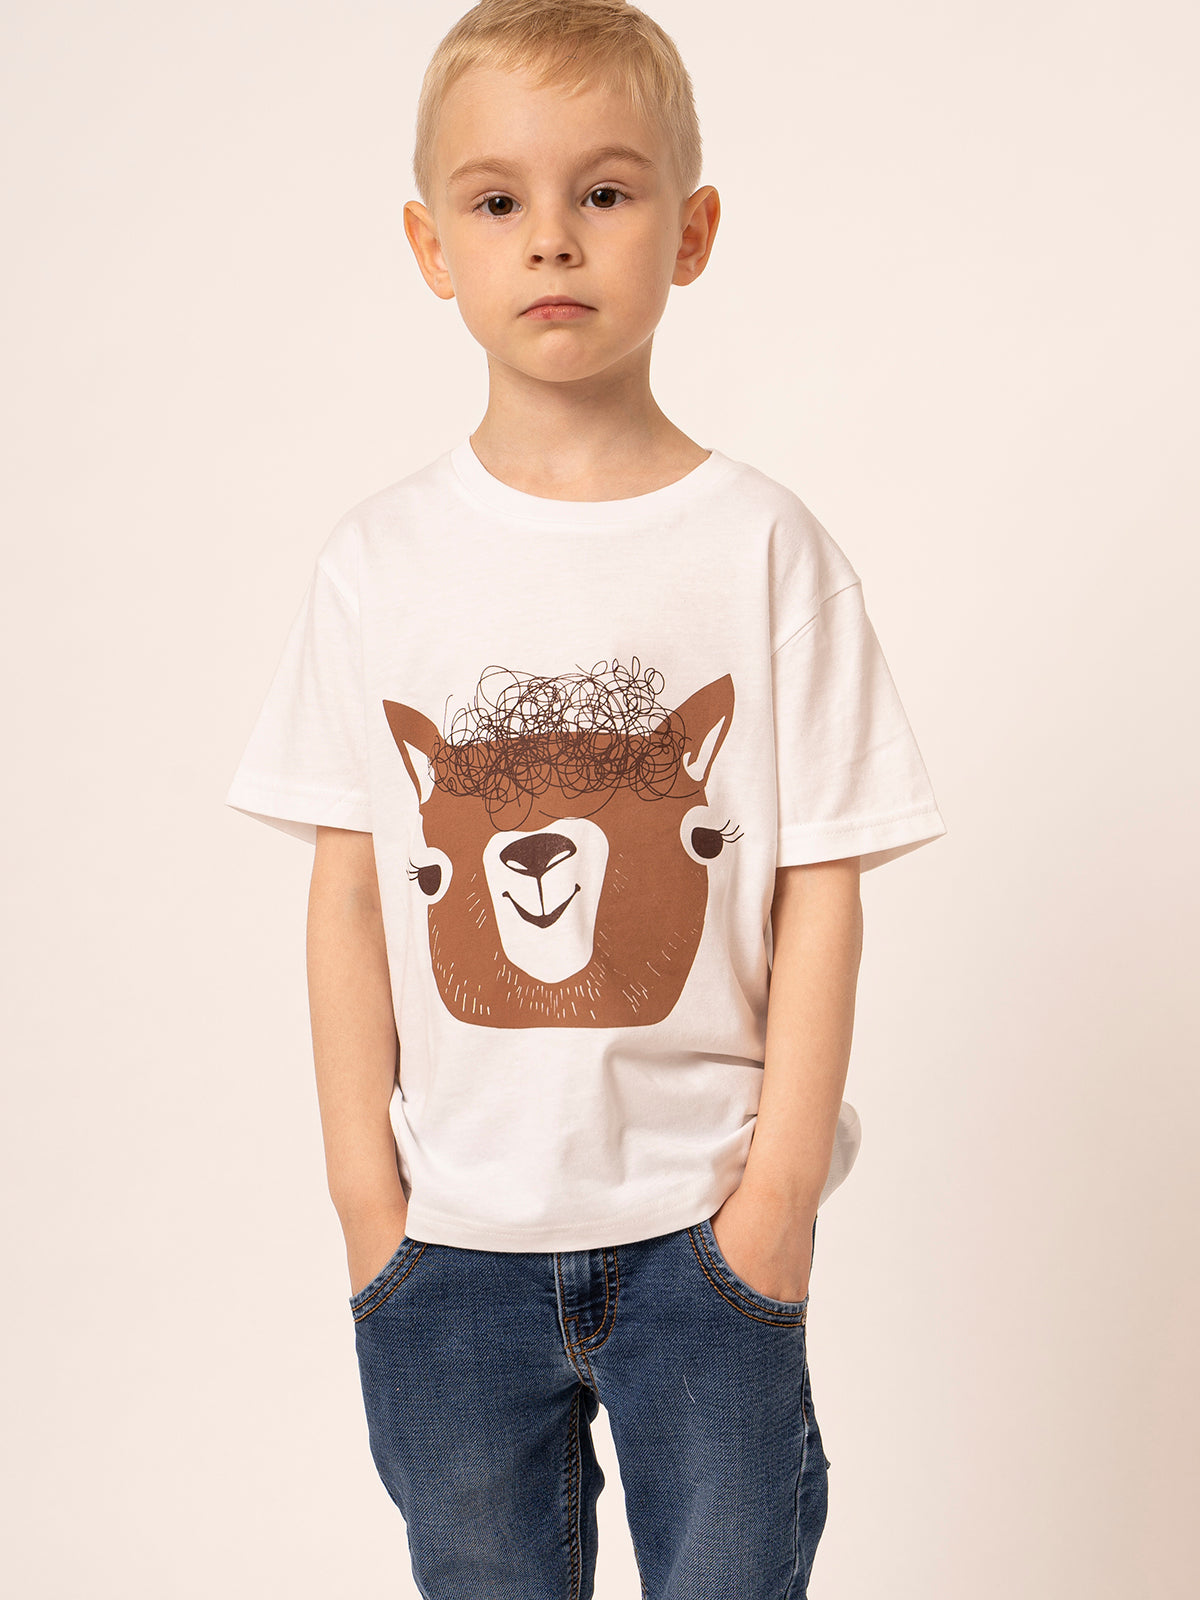 Alpaca patterned white kids t-shirt